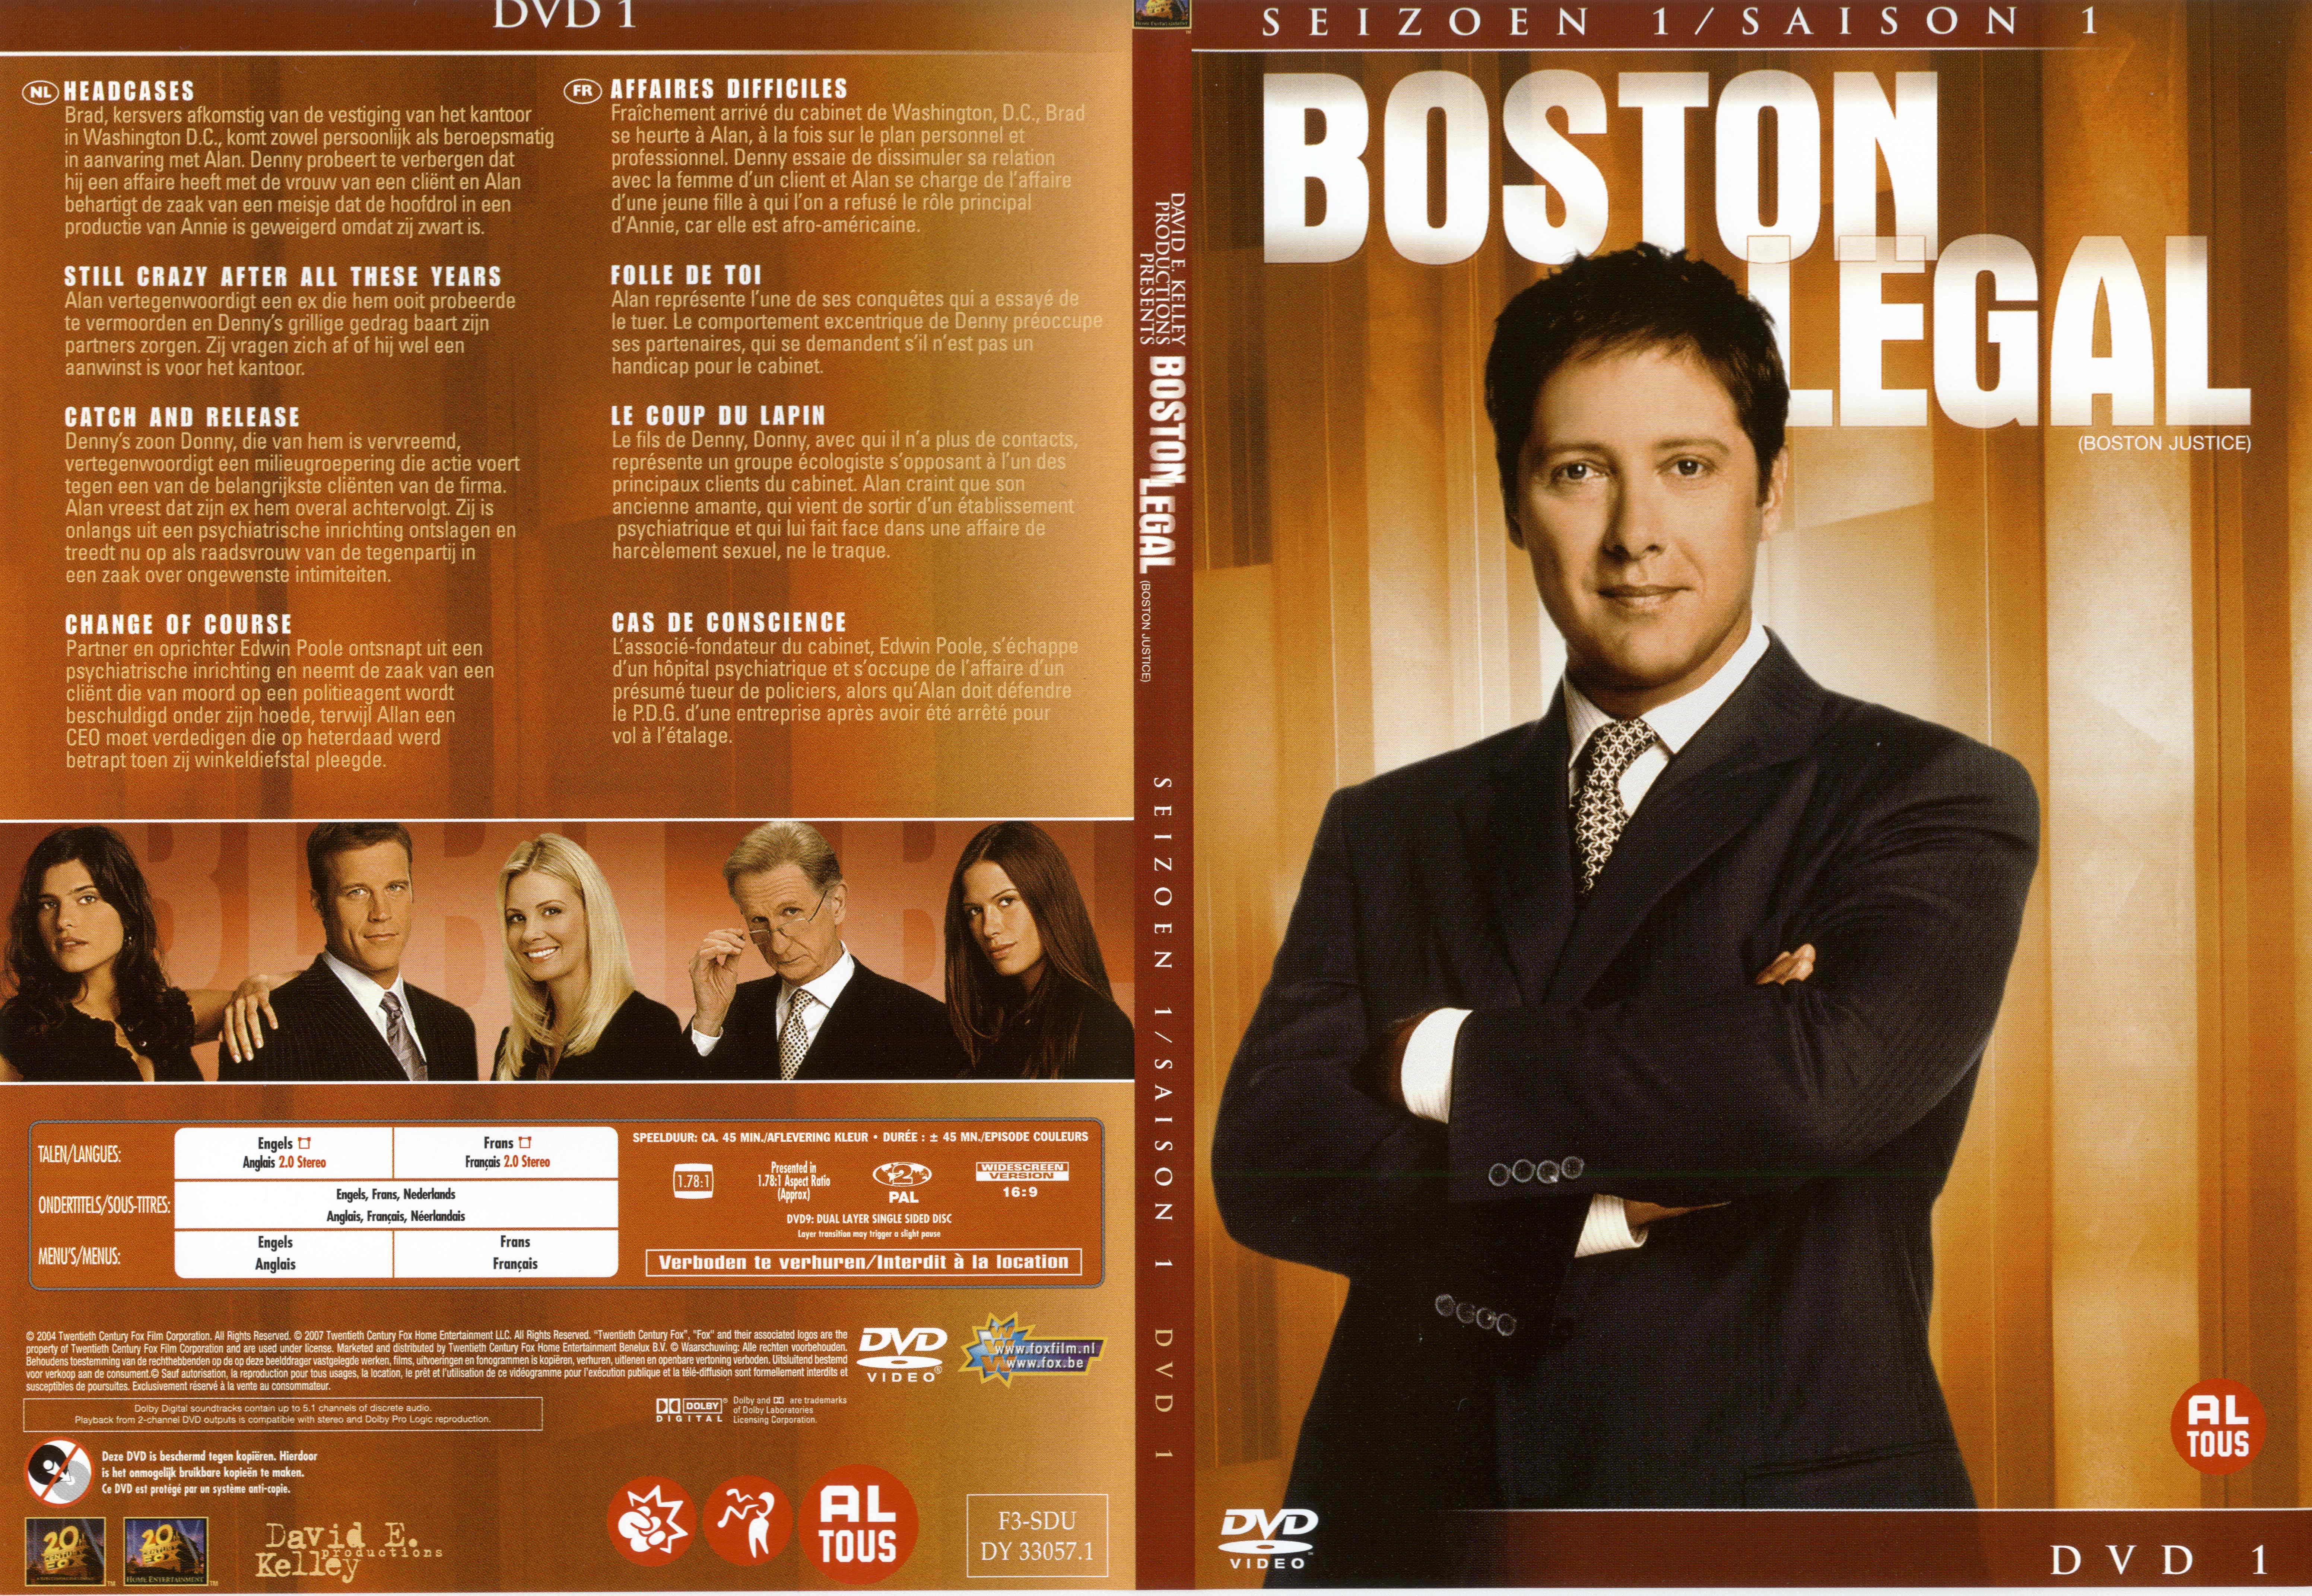 Jaquette DVD Boston legal - Boston justice Saison 1 DVD 1